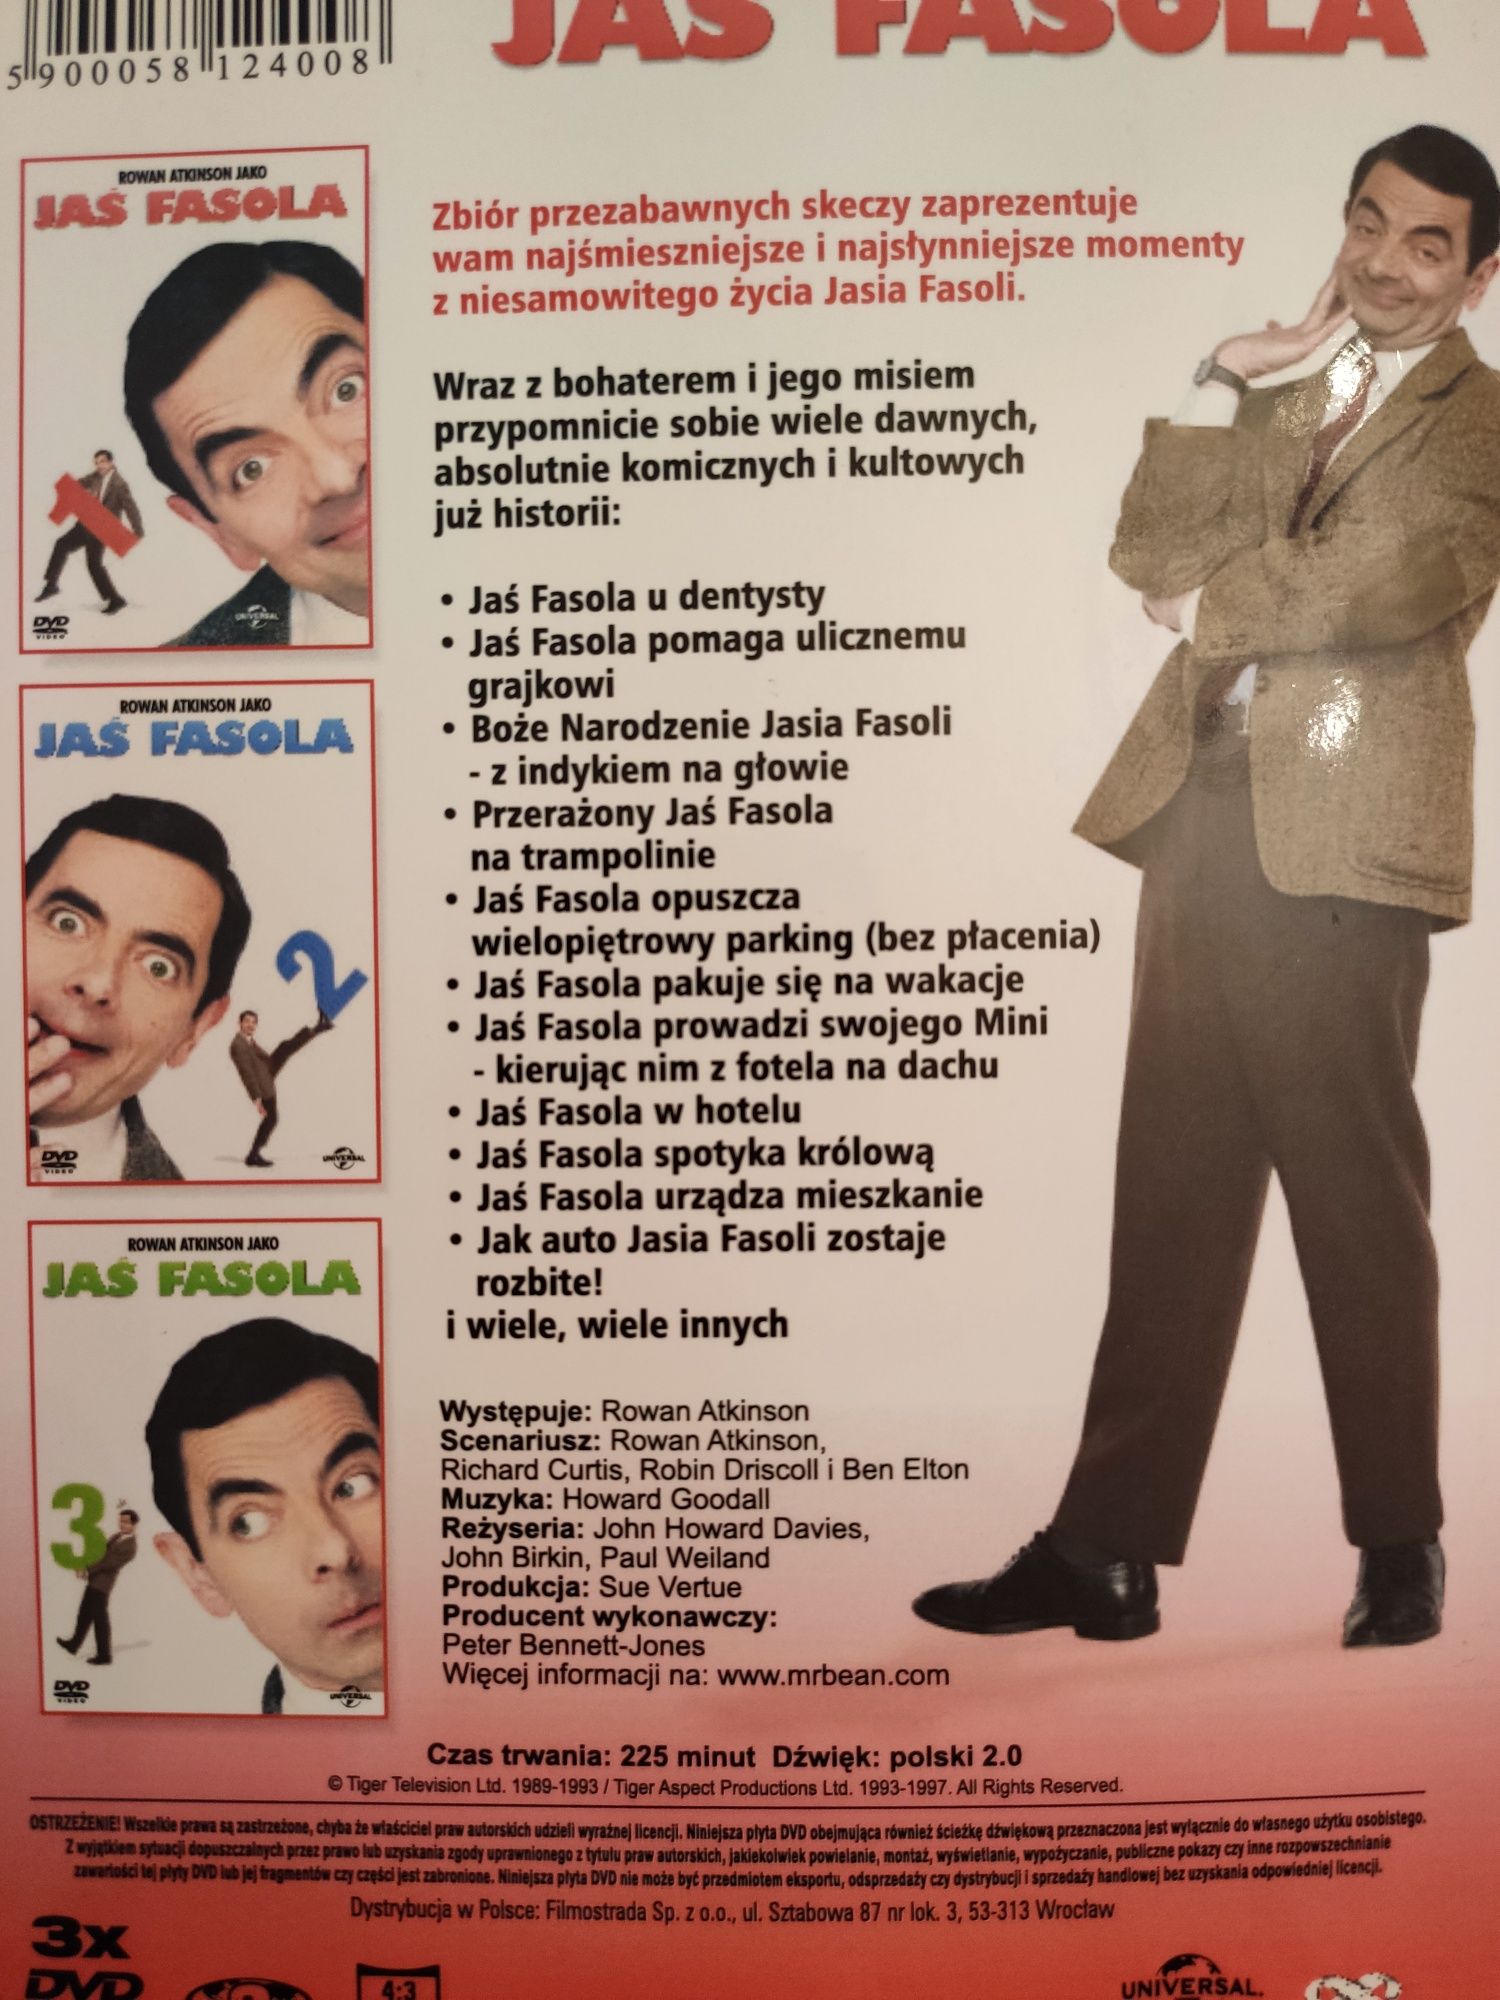 Jaś Fasola Dvd box